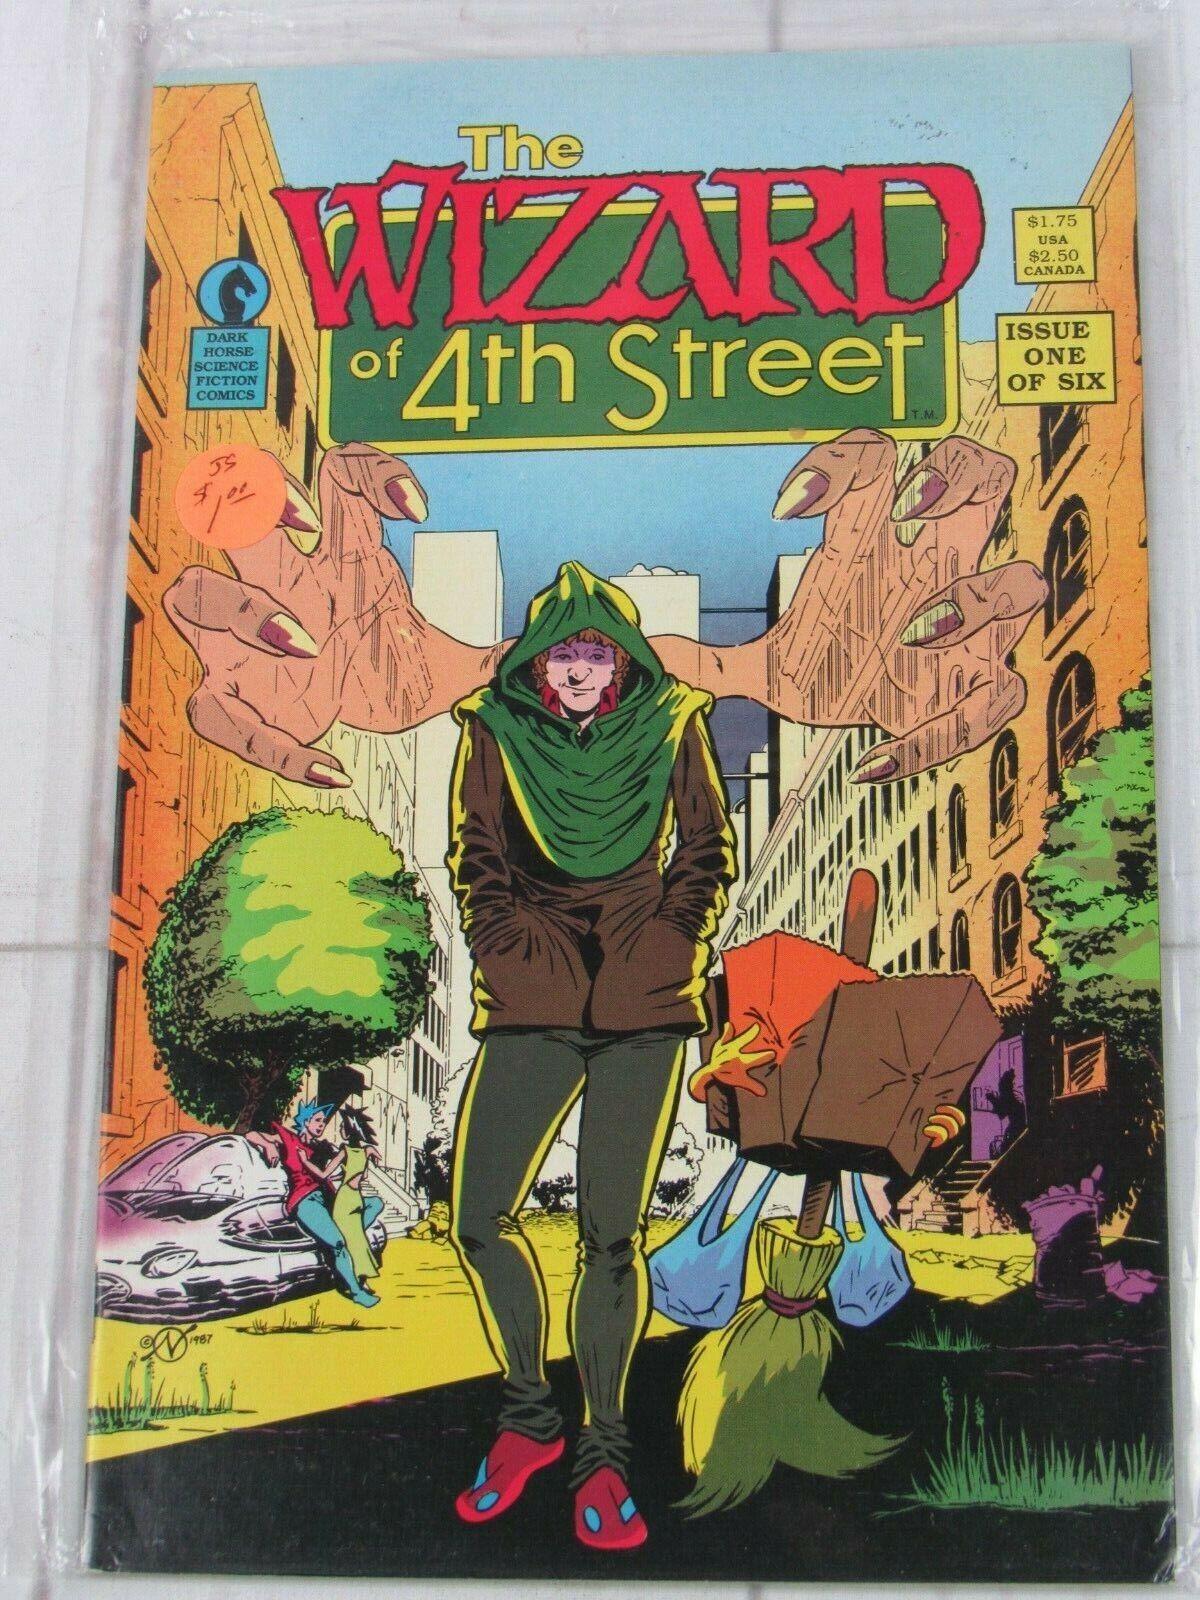 The Wizard of 4th Street #1 1987 Dark Horse Comics